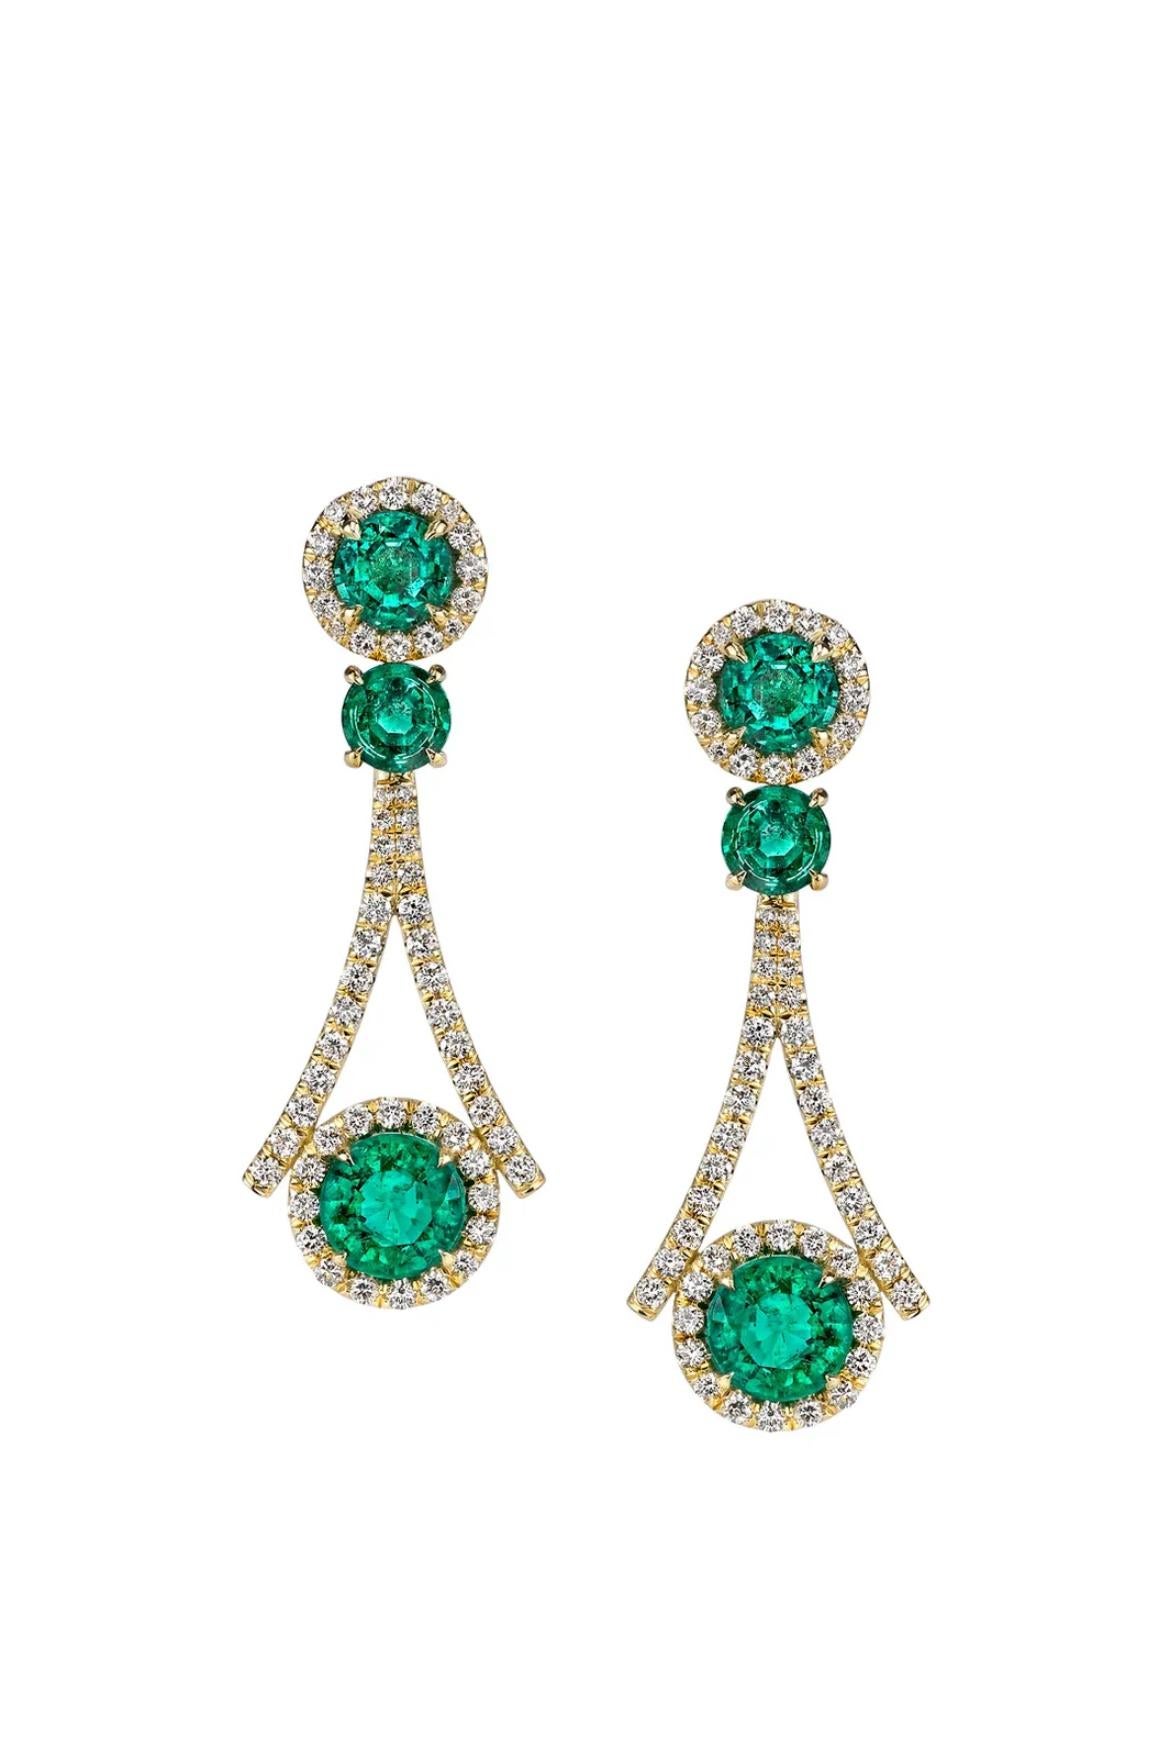 Modern 18K yellow gold, round-cut Zambian Emerald Earrings. 7.19 carats. For Sale